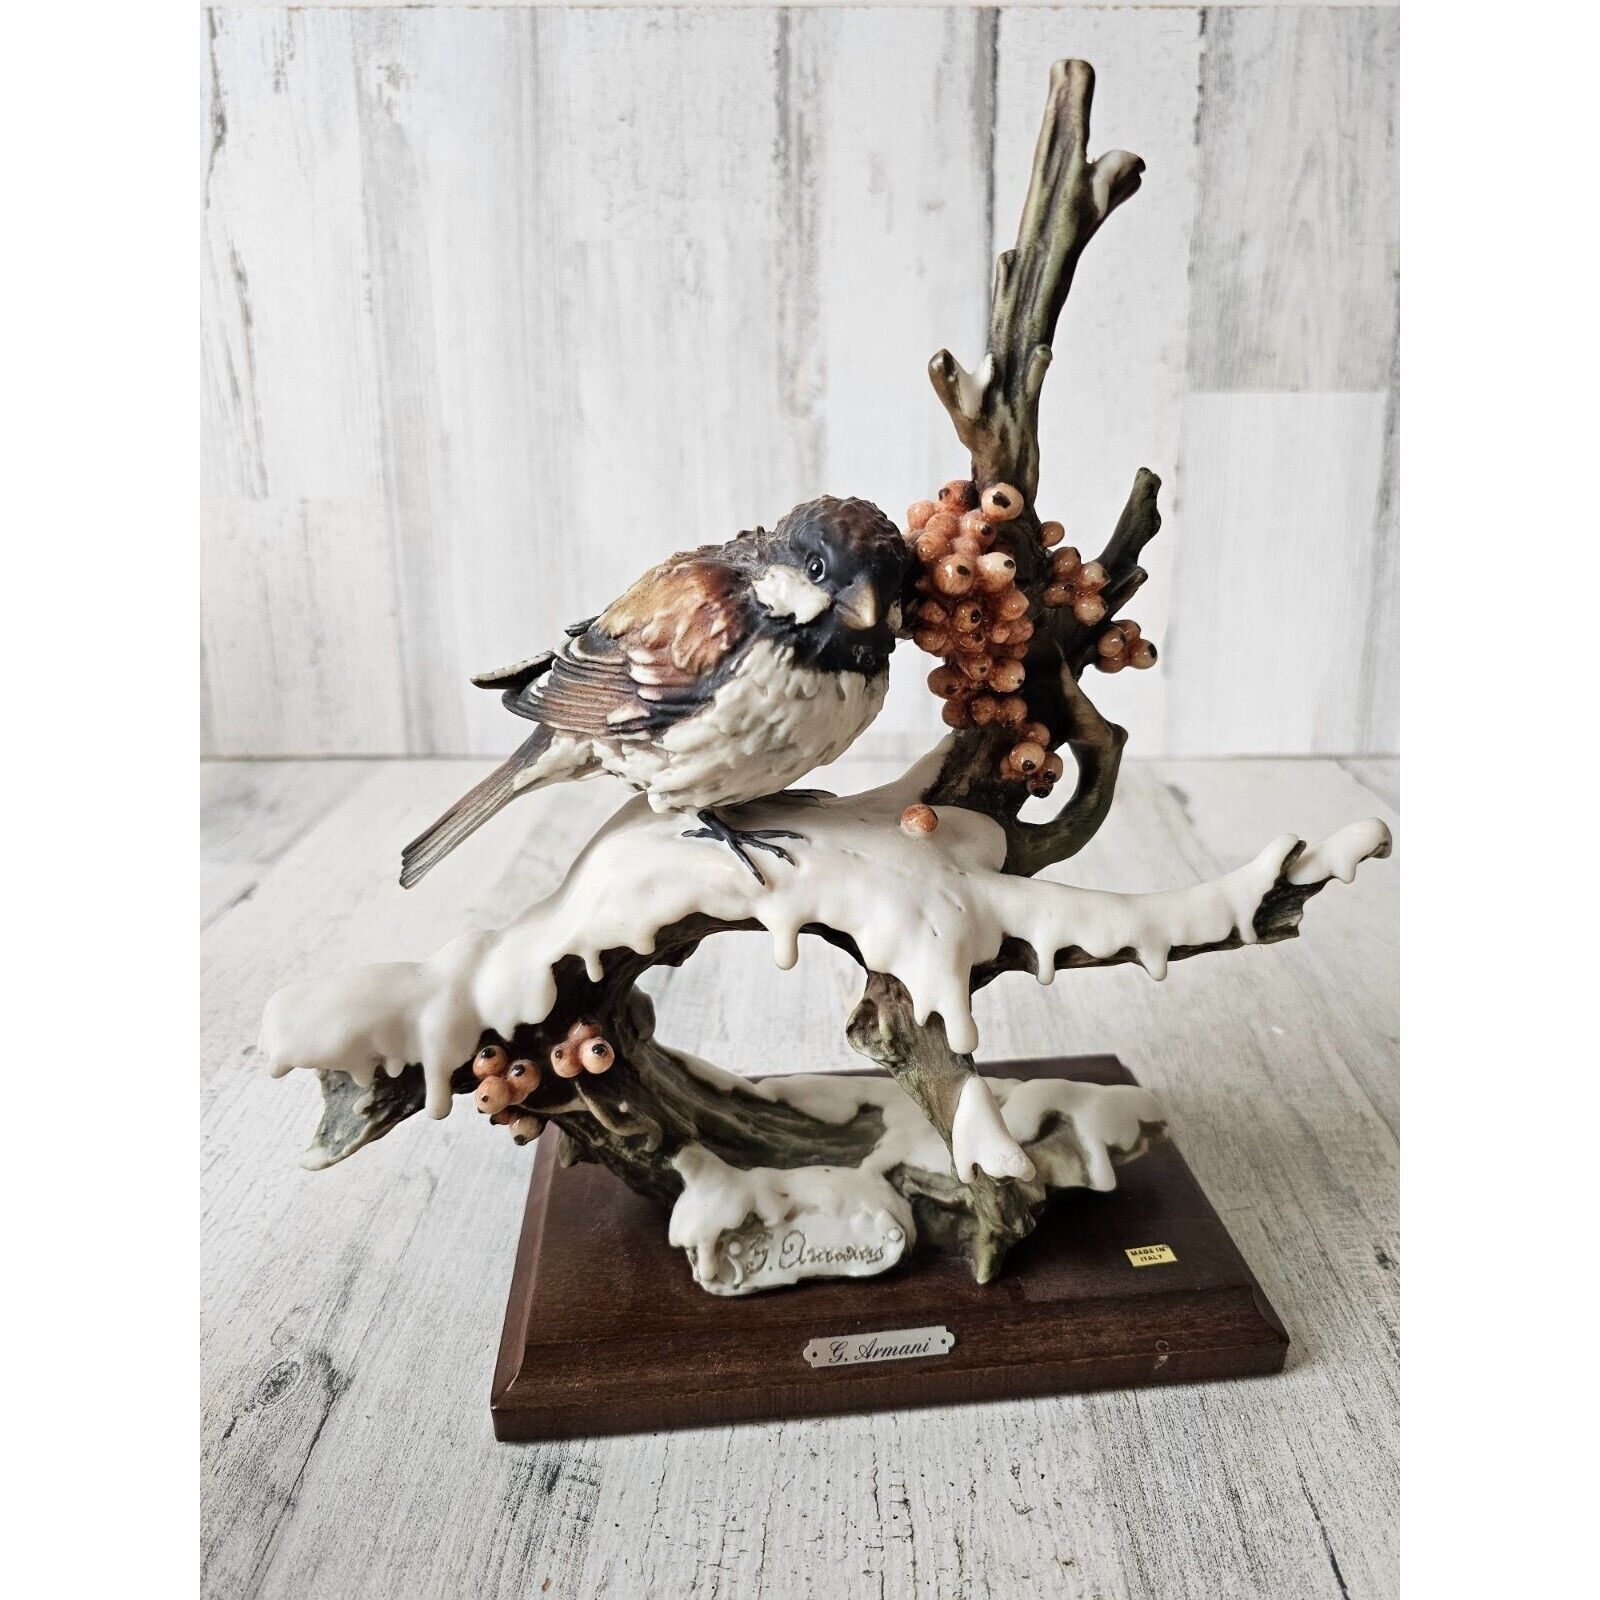 G Armani Sparrow bird Captain amante Florence 1989? Figuring statue berries bran